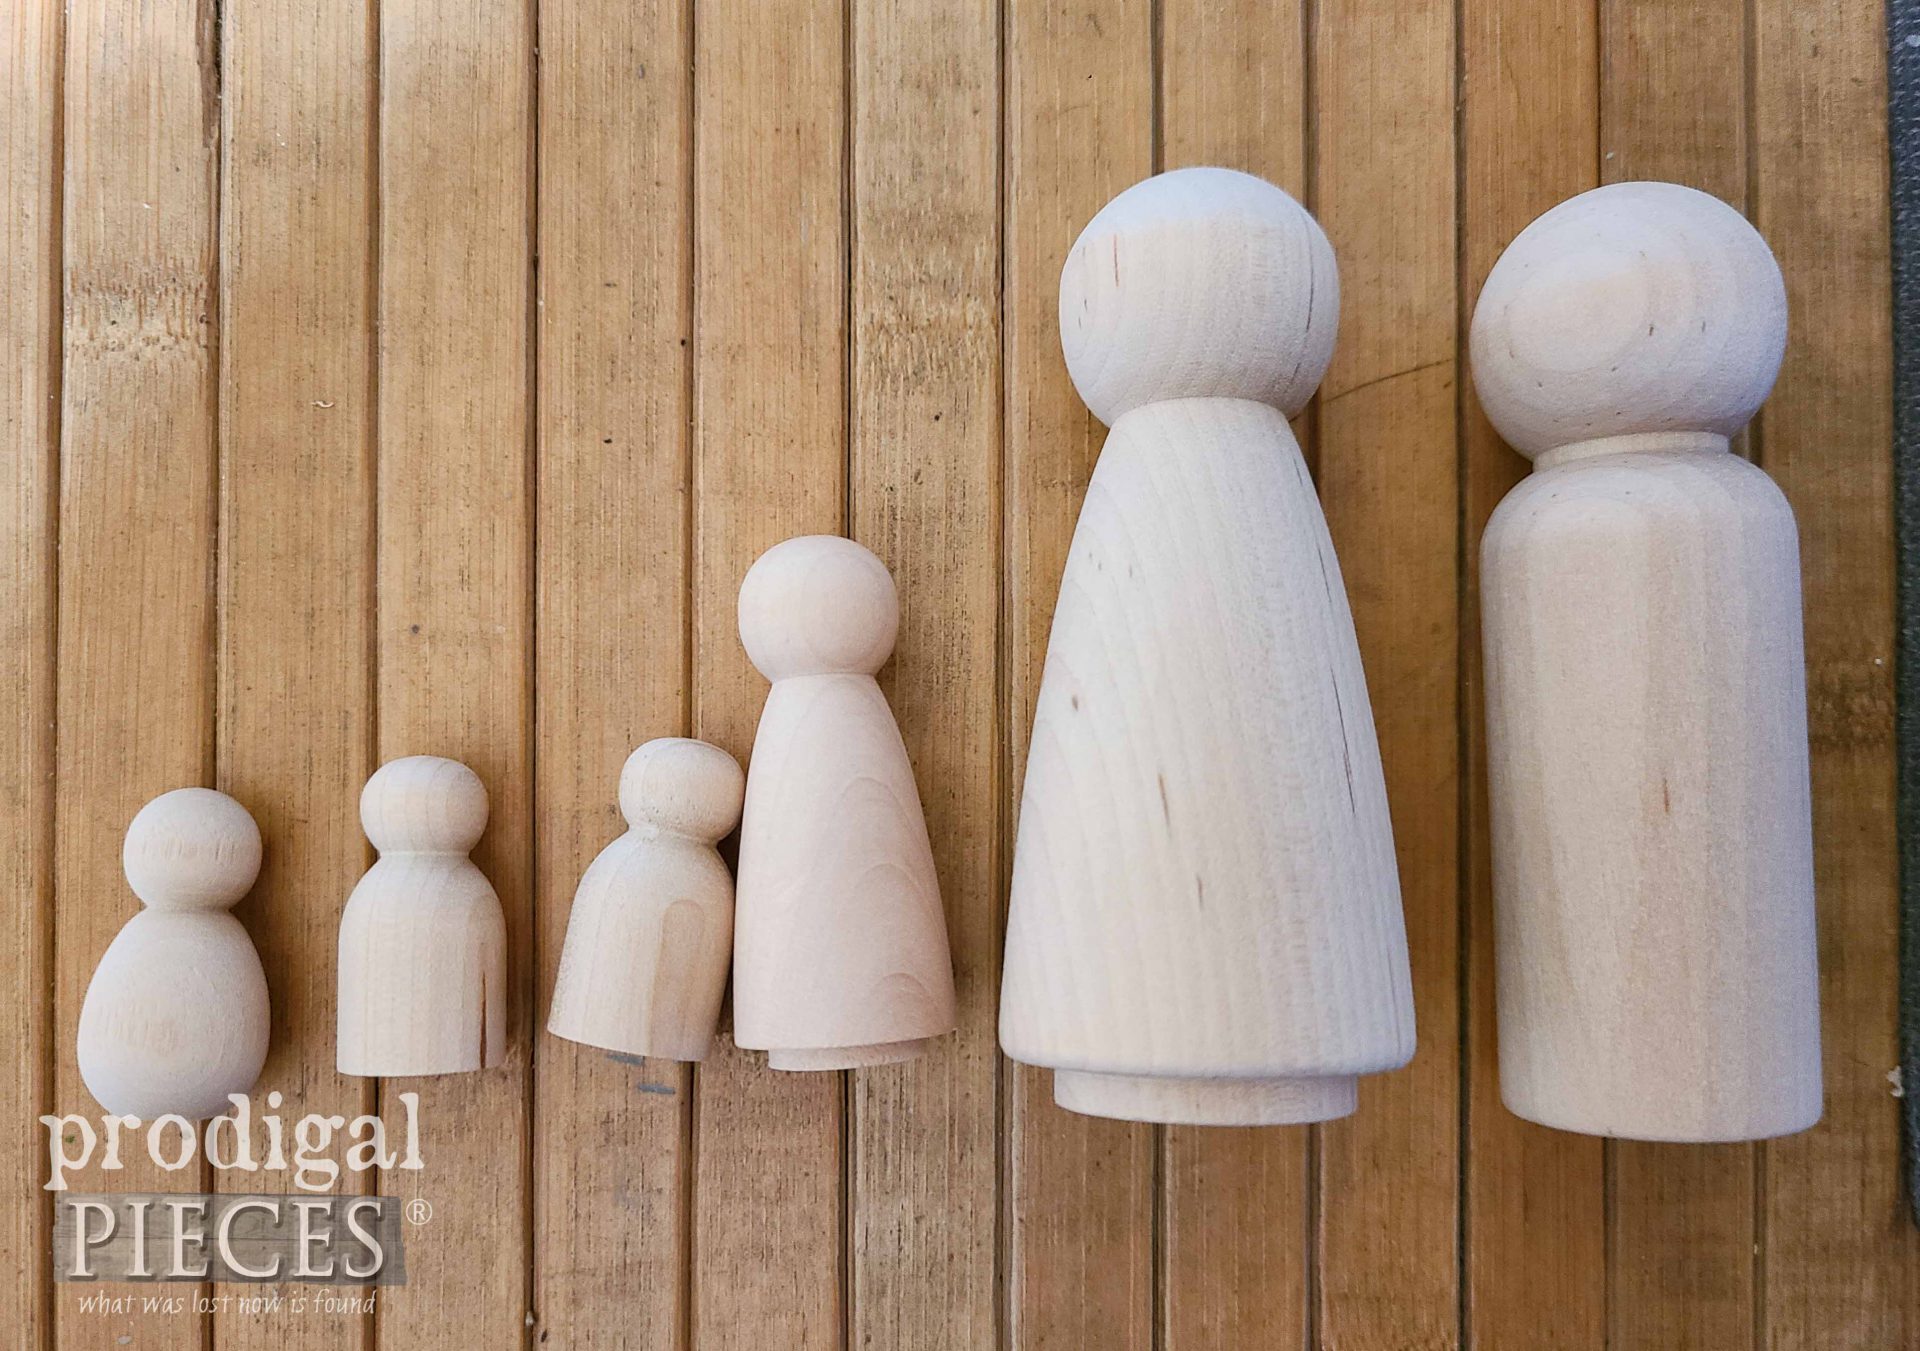 Wooden Peg Dolls for Travel Dollhouse | prodigalpieces.com #prodigalpieces